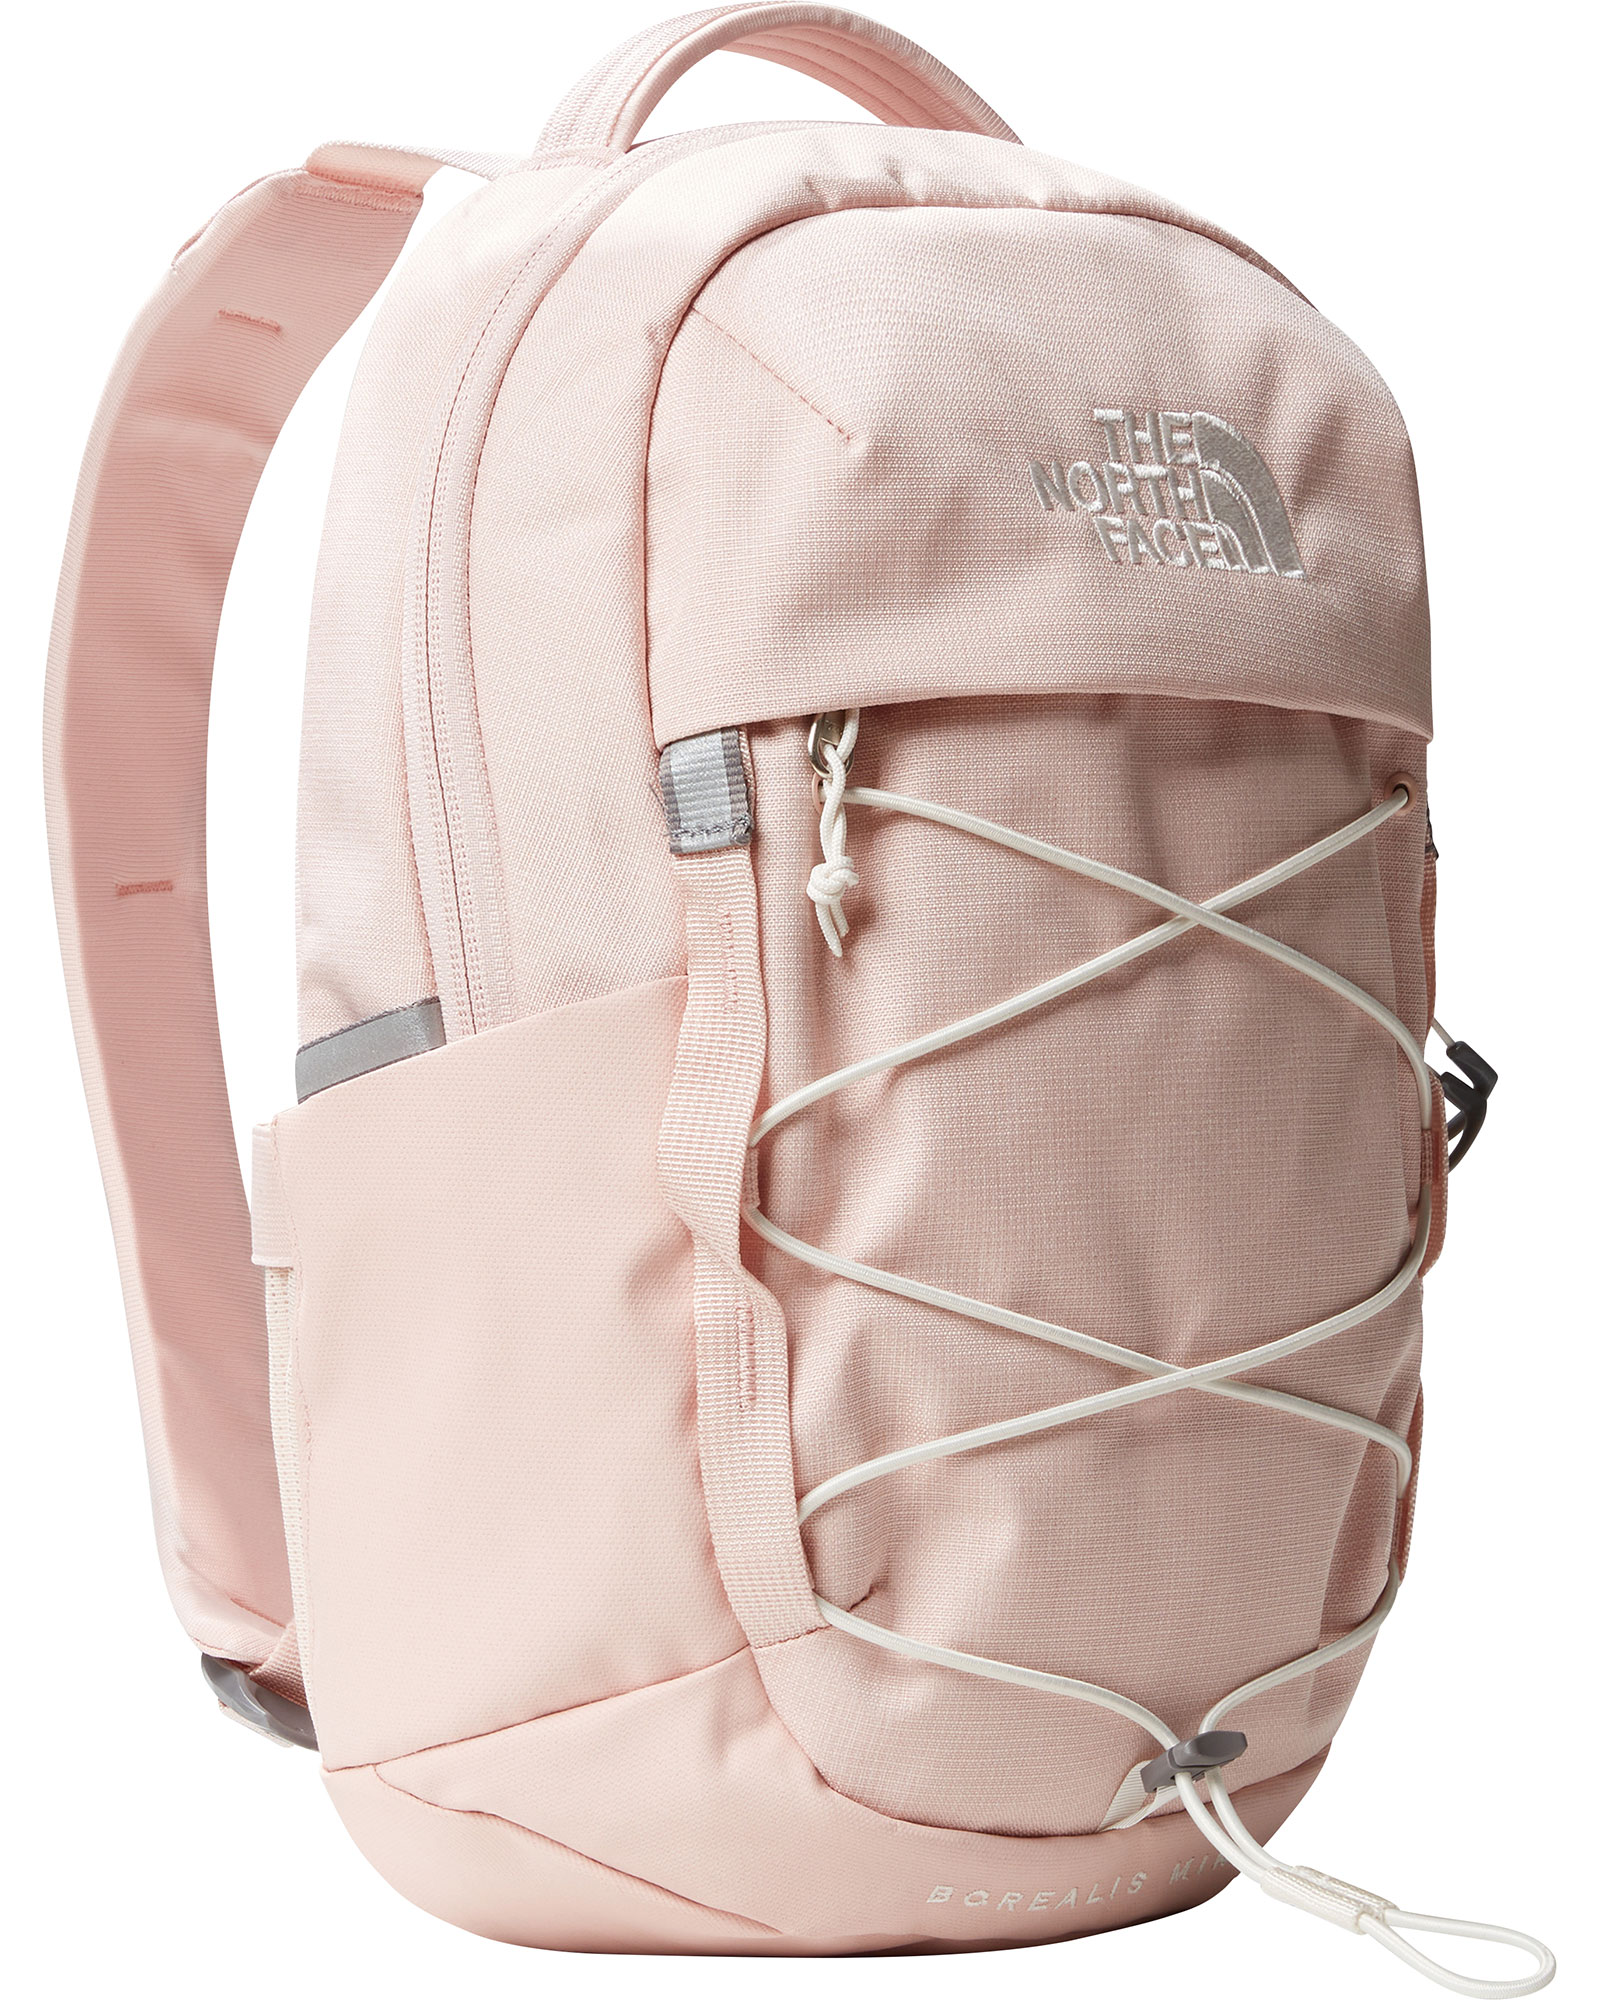 The North Face Borealis Mini Backpack - Pink Moss Dark Heather/Gardenia White